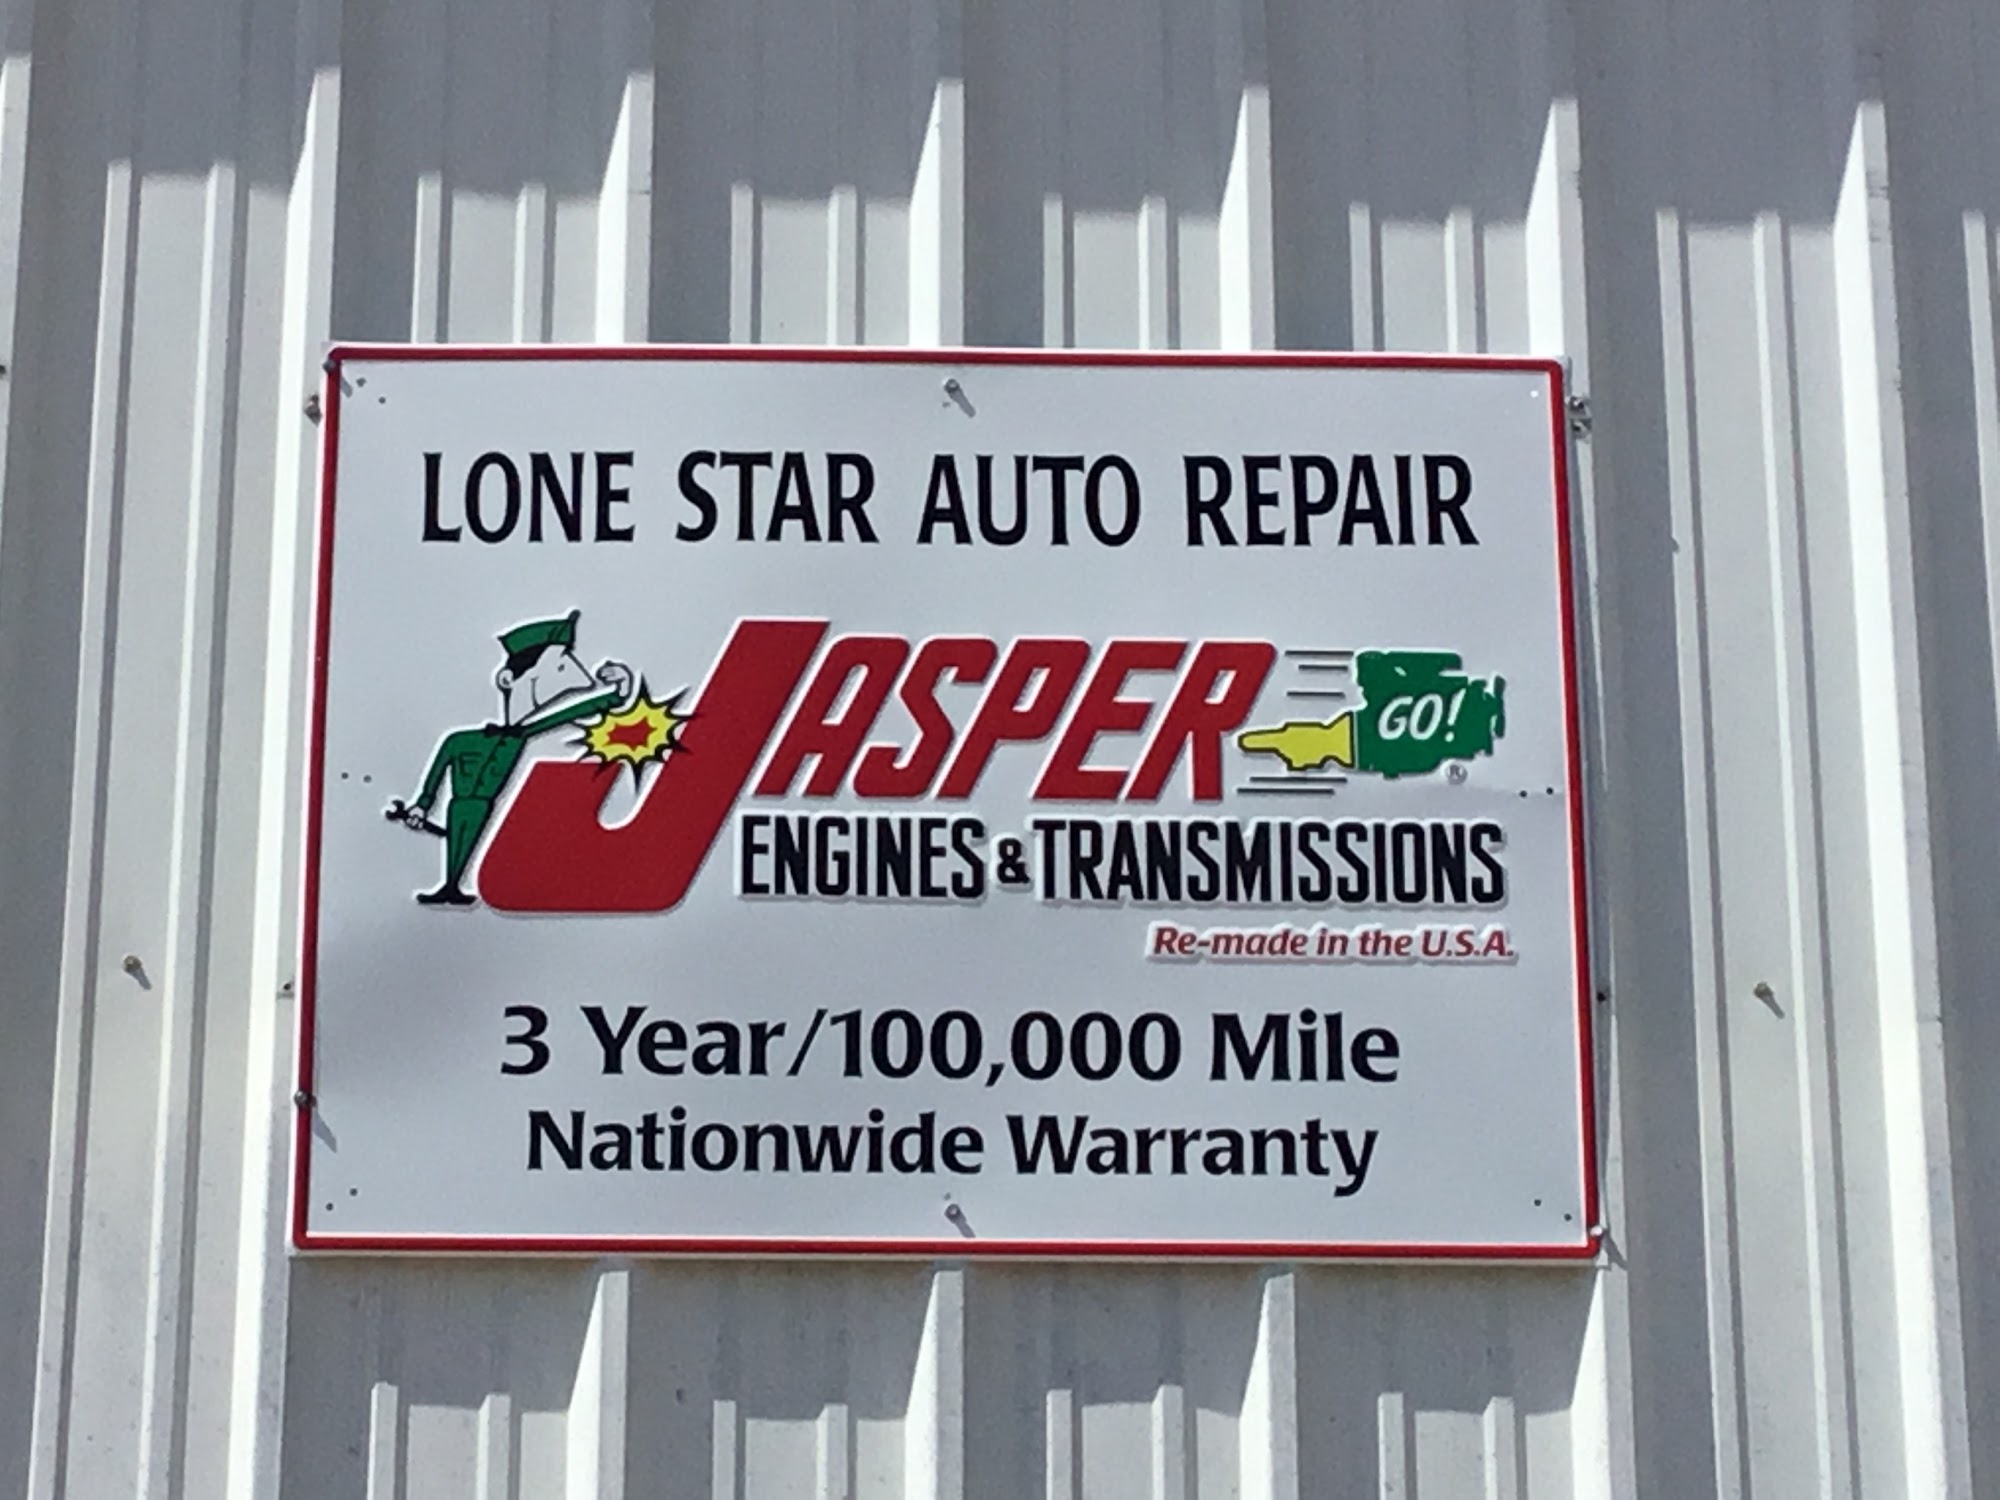 Lone Star Auto Repair